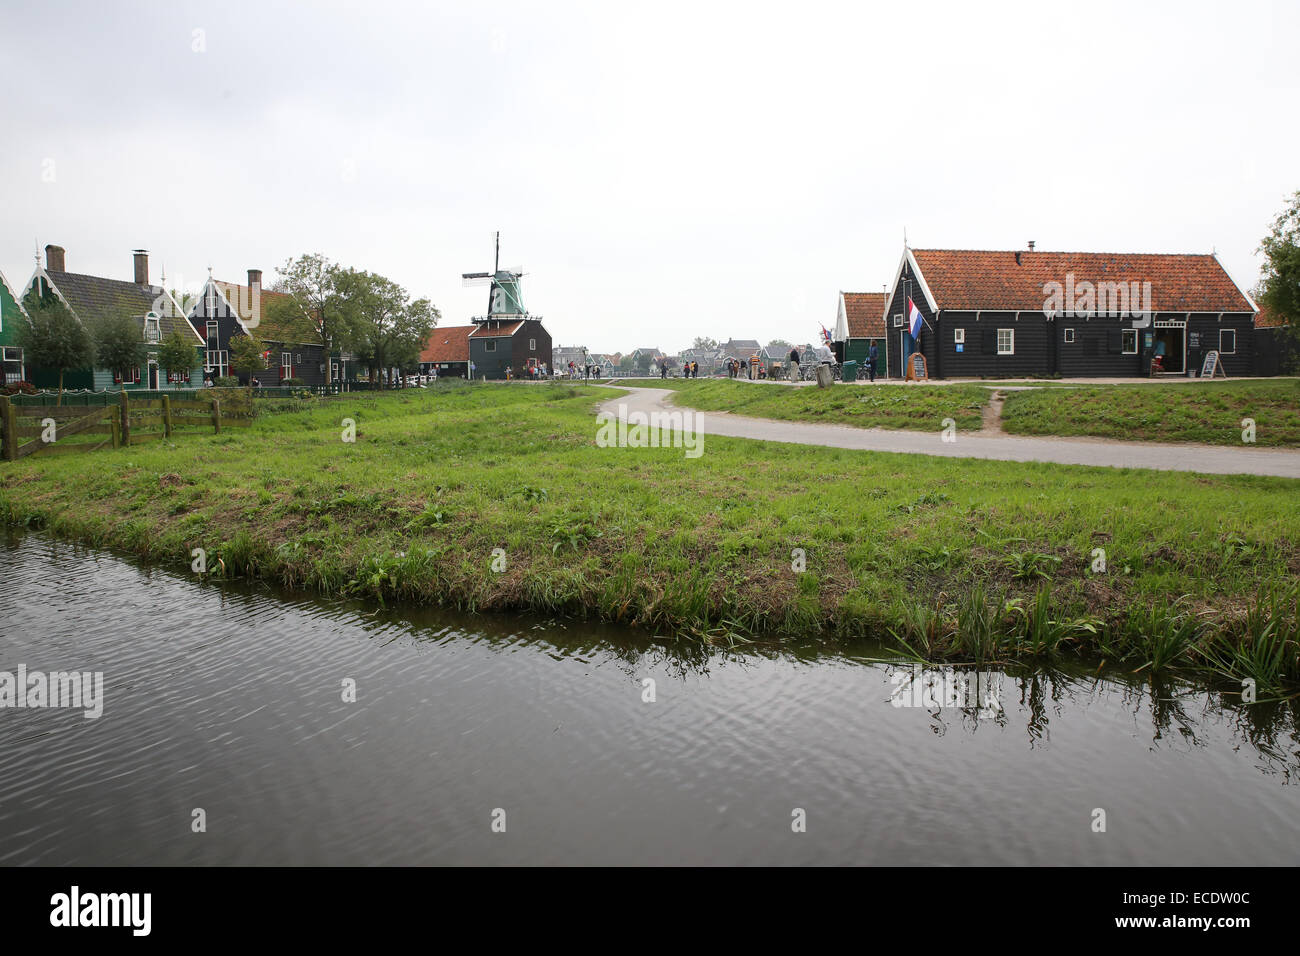 Holanda país molino de viento lateral Foto de stock